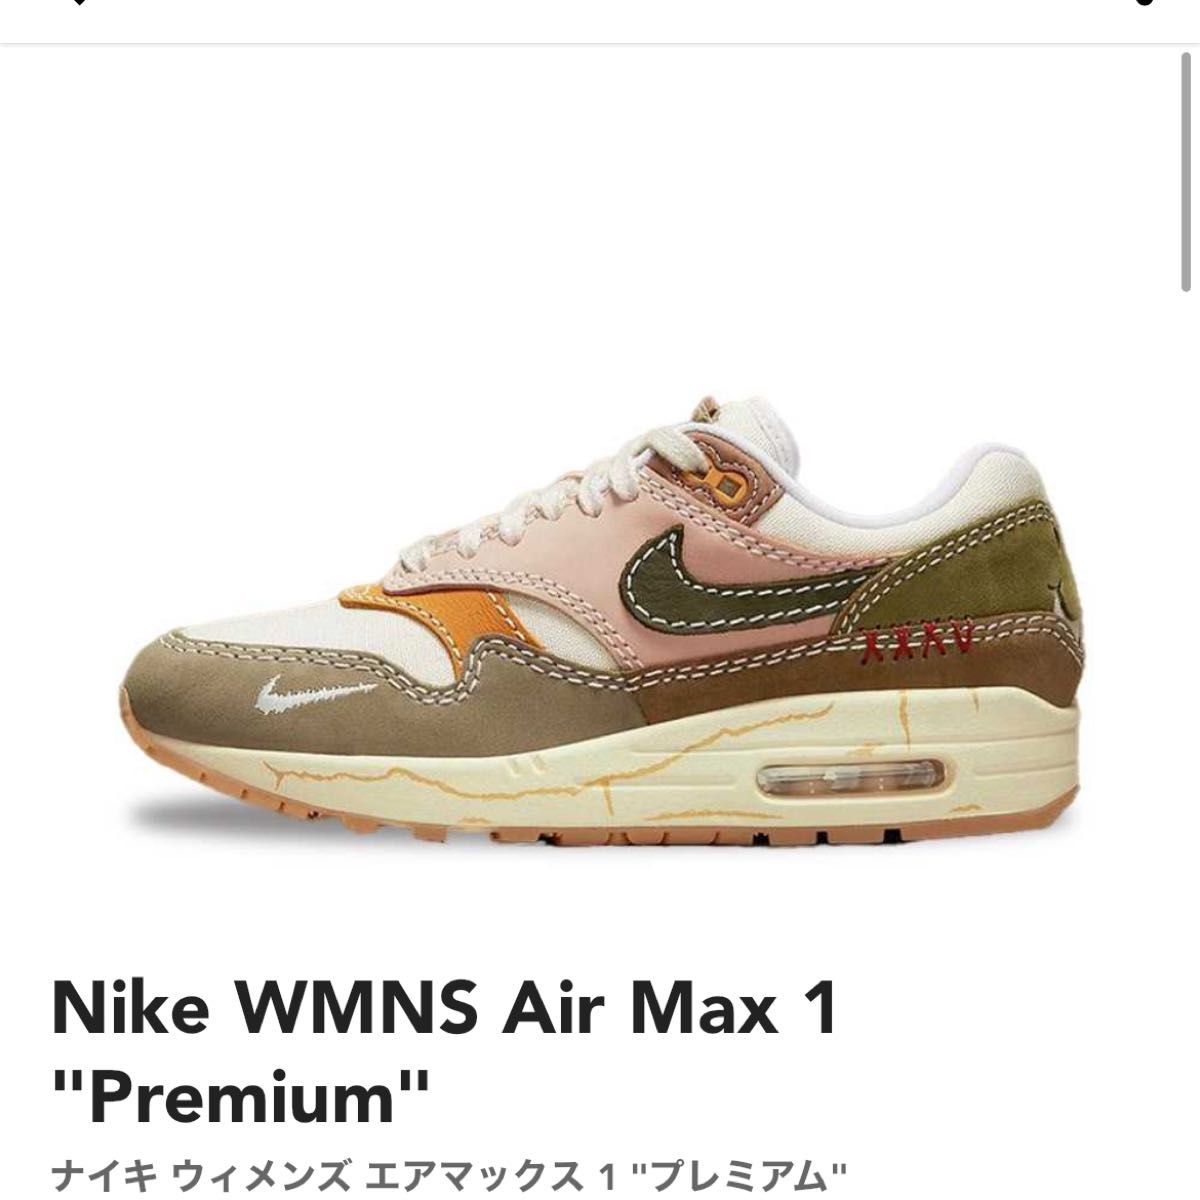 Nike WMNS Air Max 1  Premium ナイキ ウィメンズ エアマックス 1 "プレミアム"